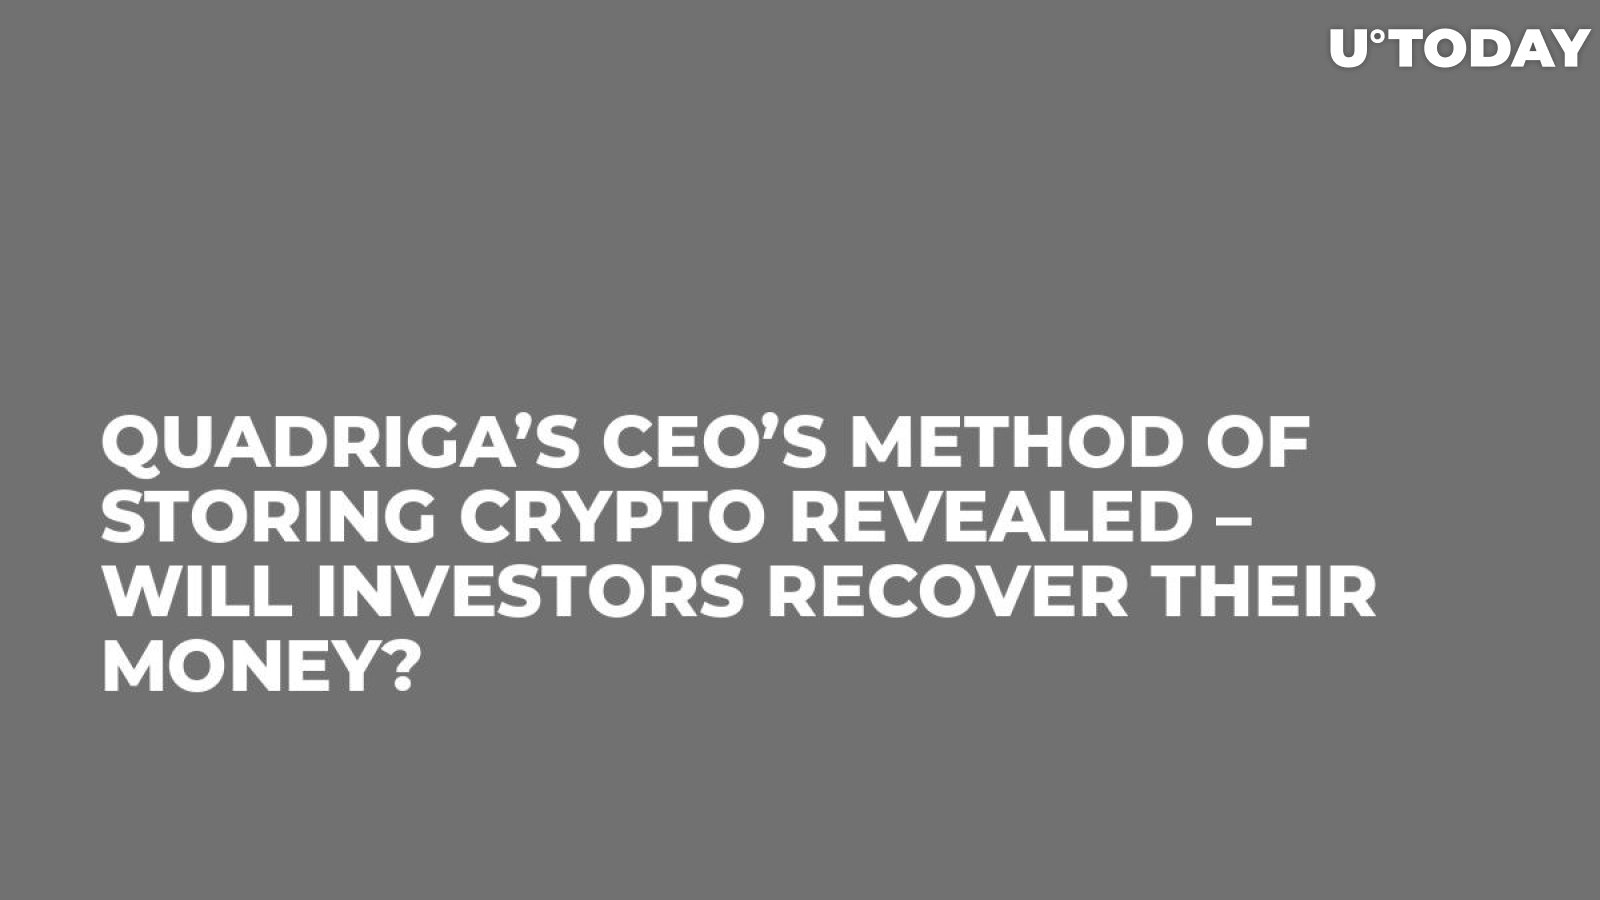 Quadriga’s CEO’s Method of Storing Crypto Revealed – Will Investors Recover Their Money?